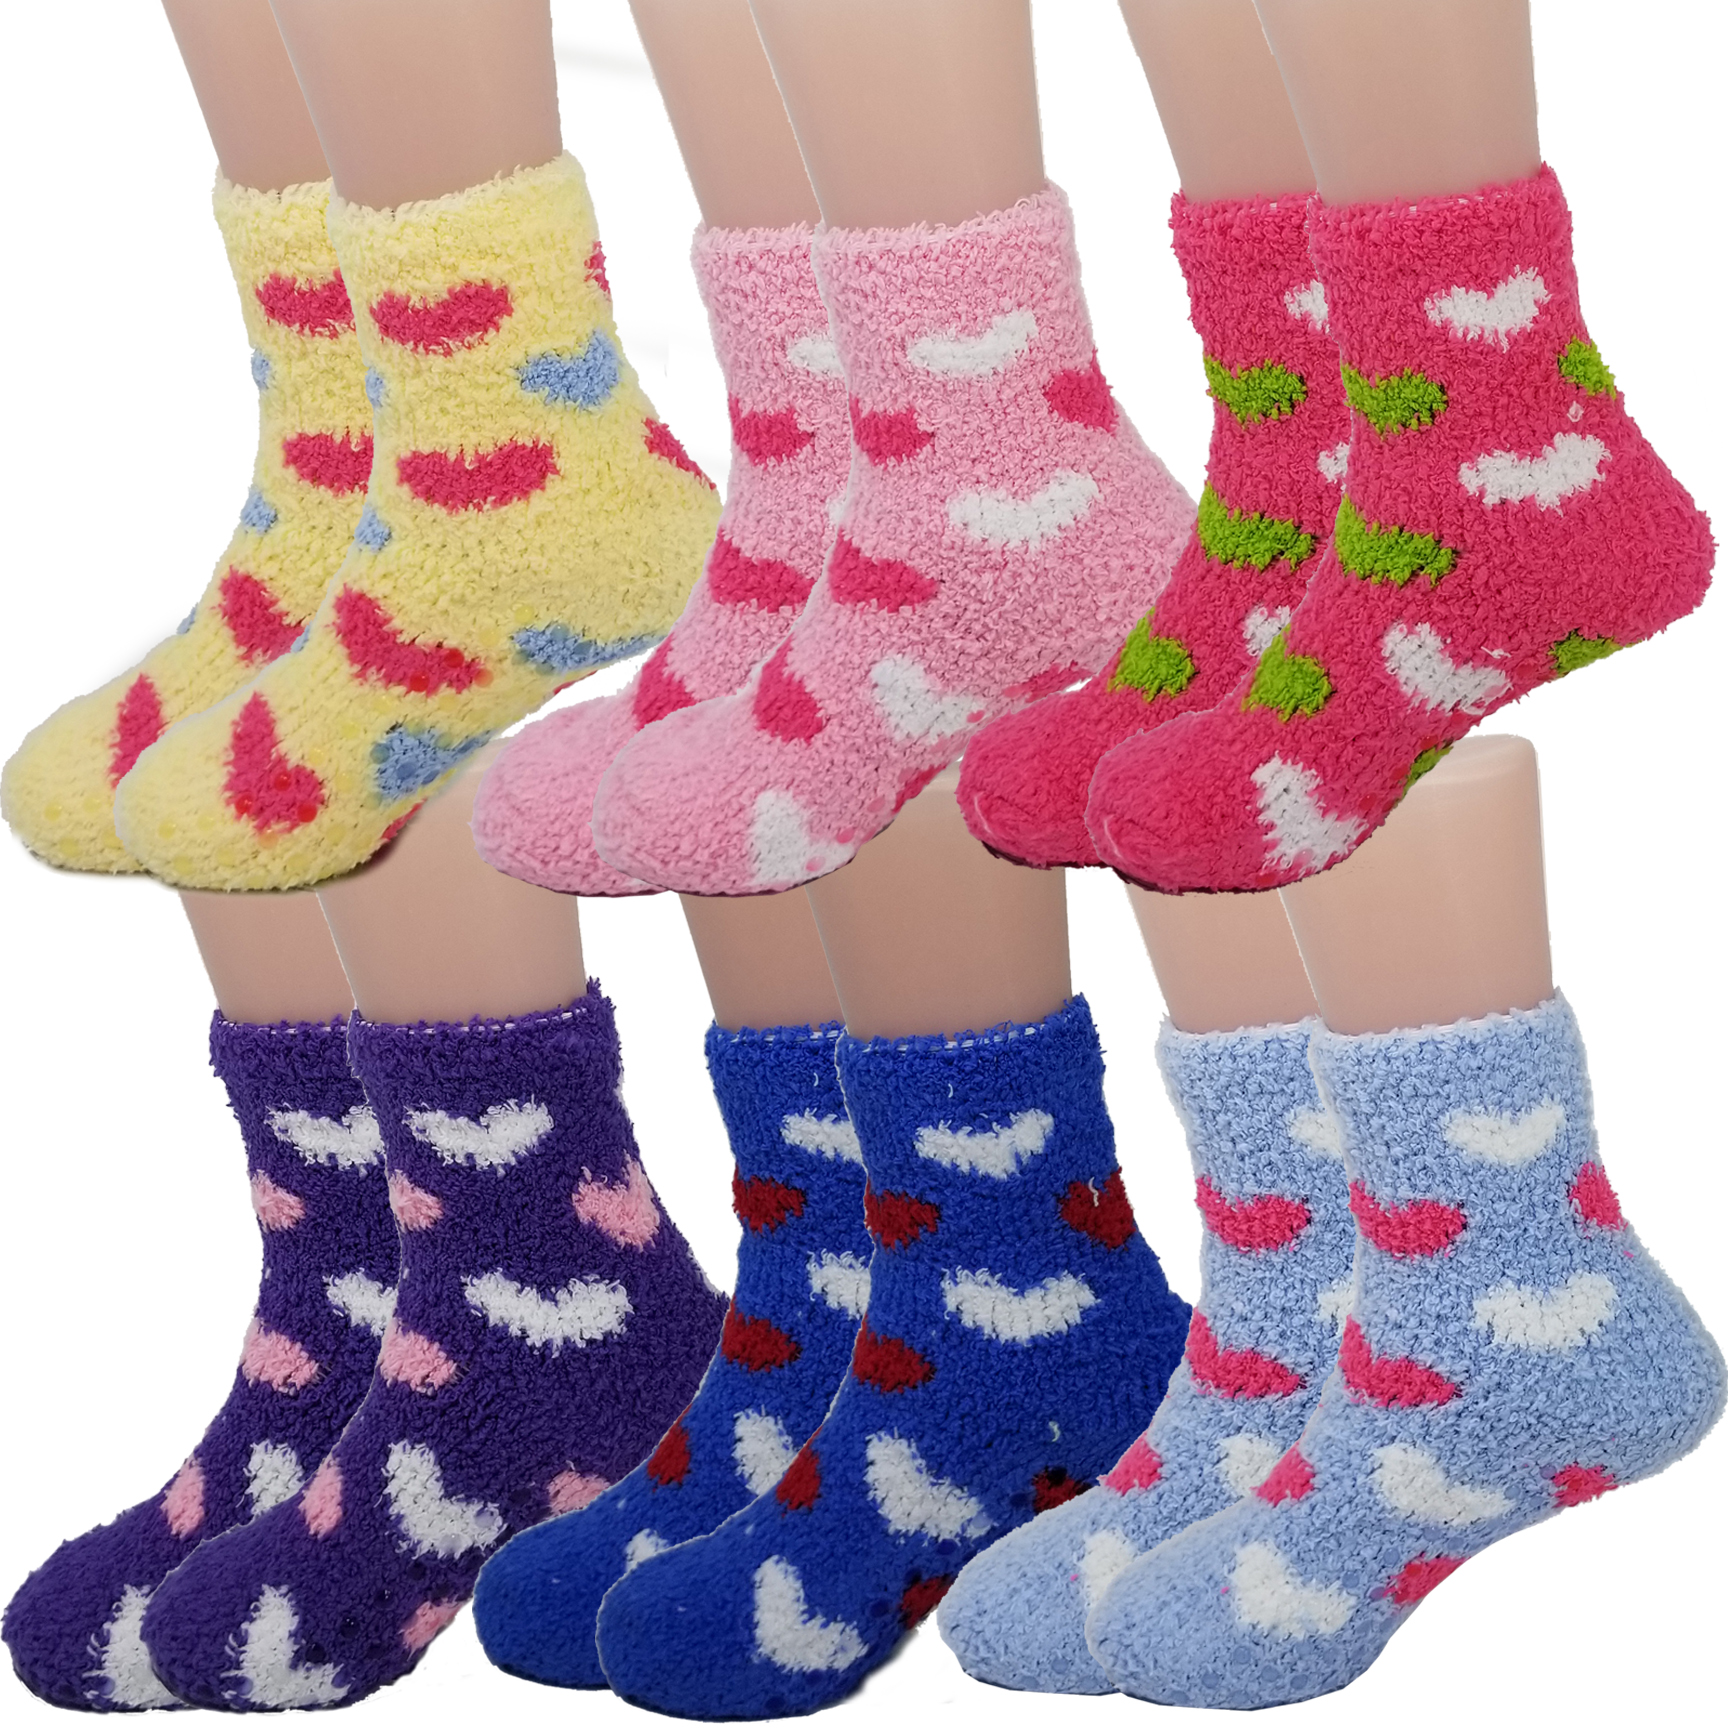 fuzzy house socks